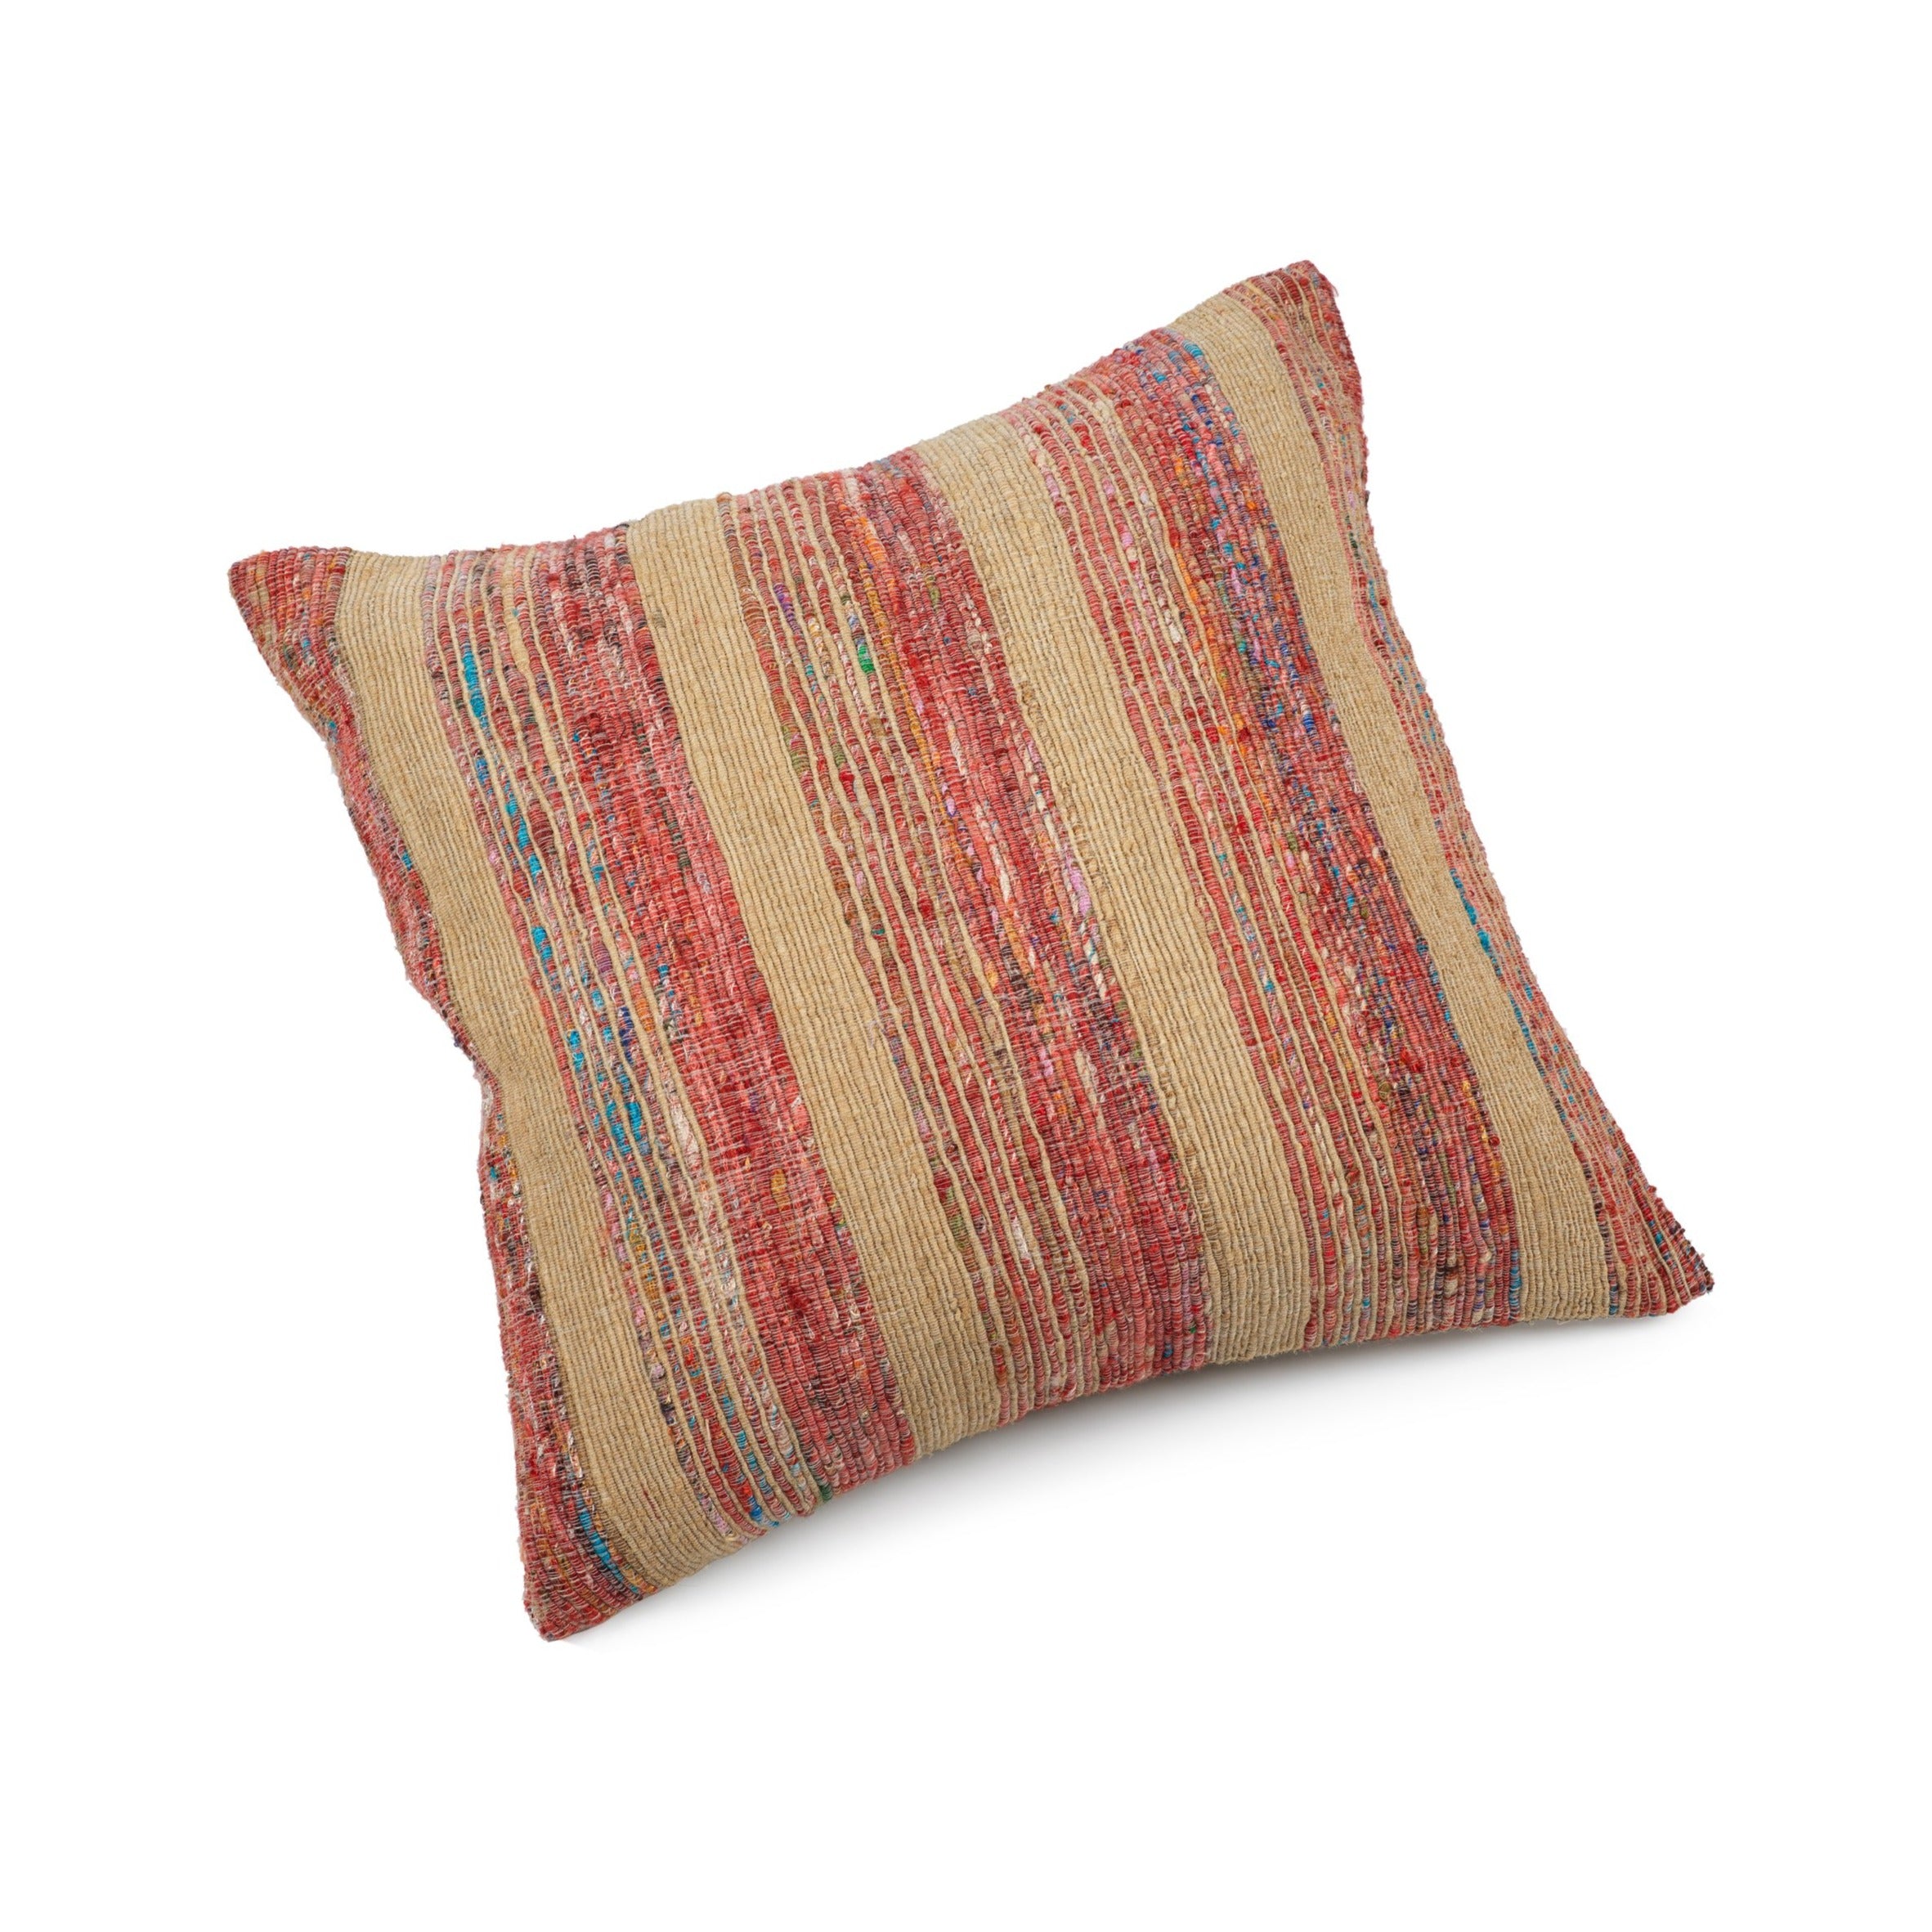 Masseria Cotton Throw Pillow - Multi Color w/ Natural Accent